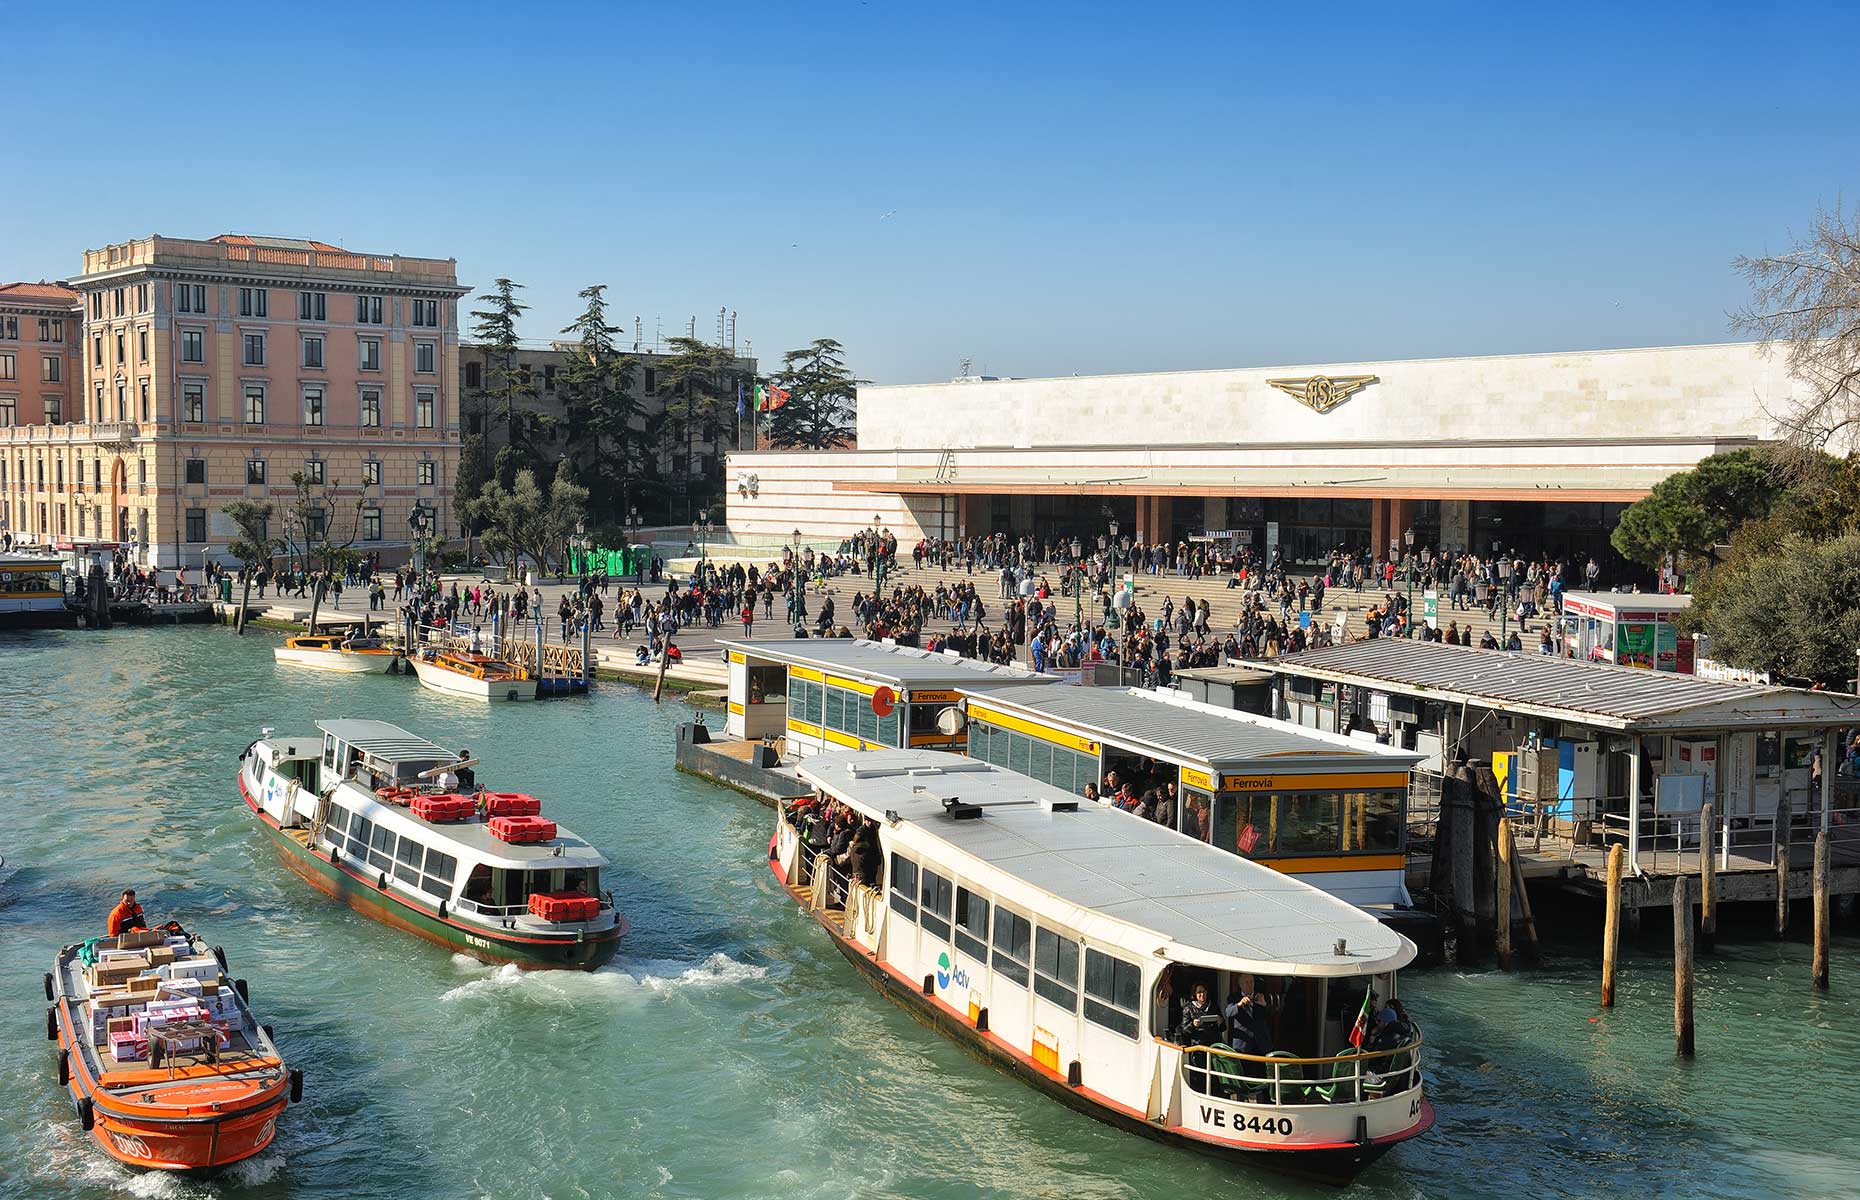 Venice Central Station (Image: giocalde/Shutterstock)